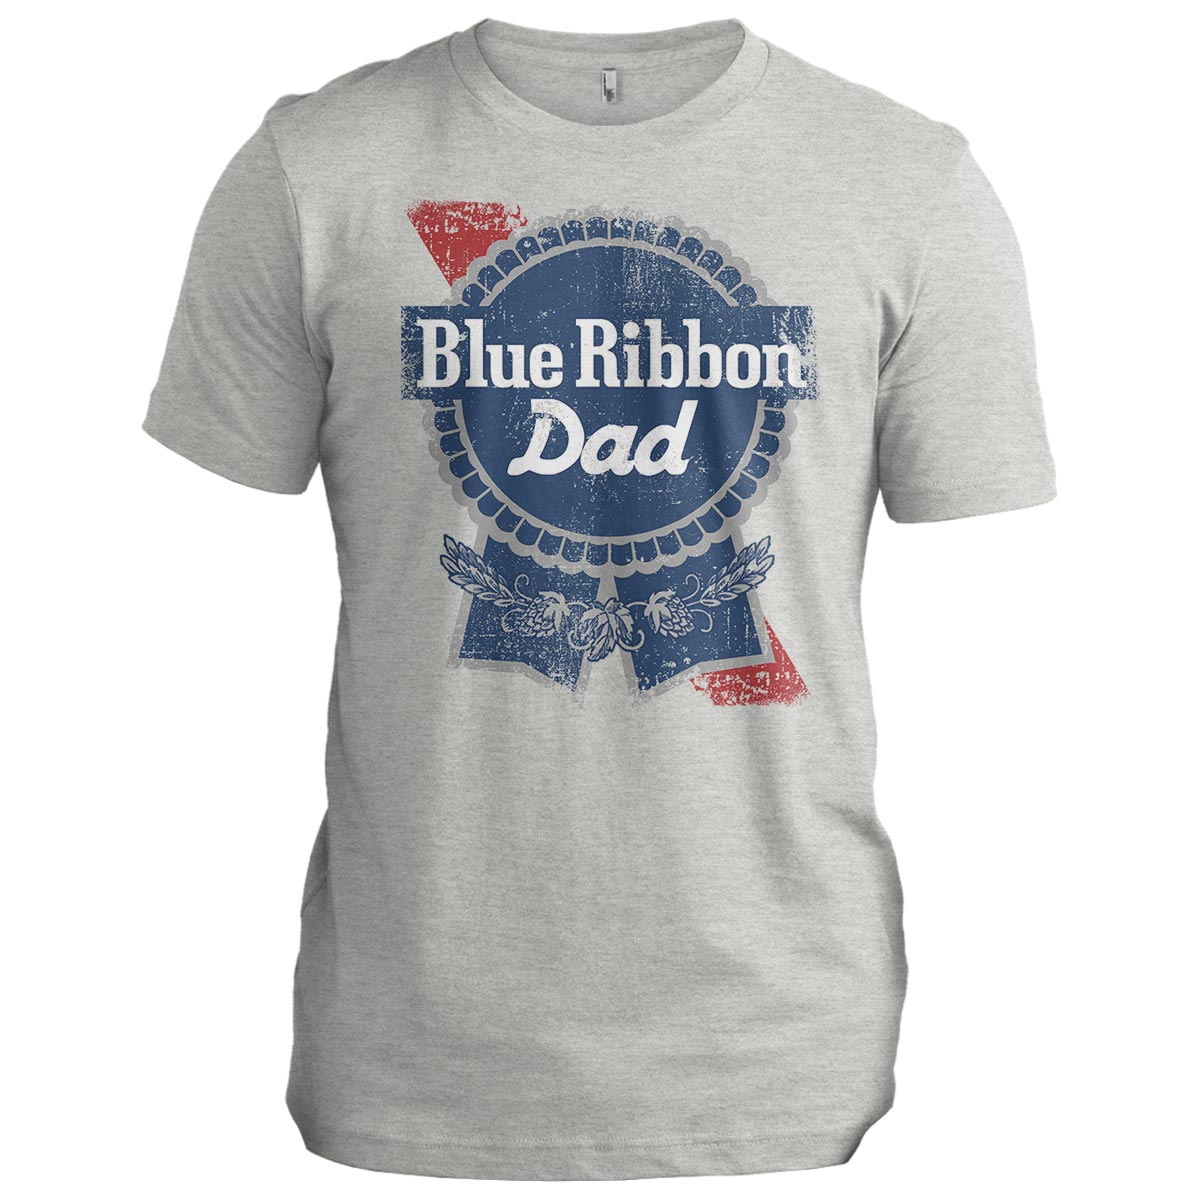 Blue Ribbon dad